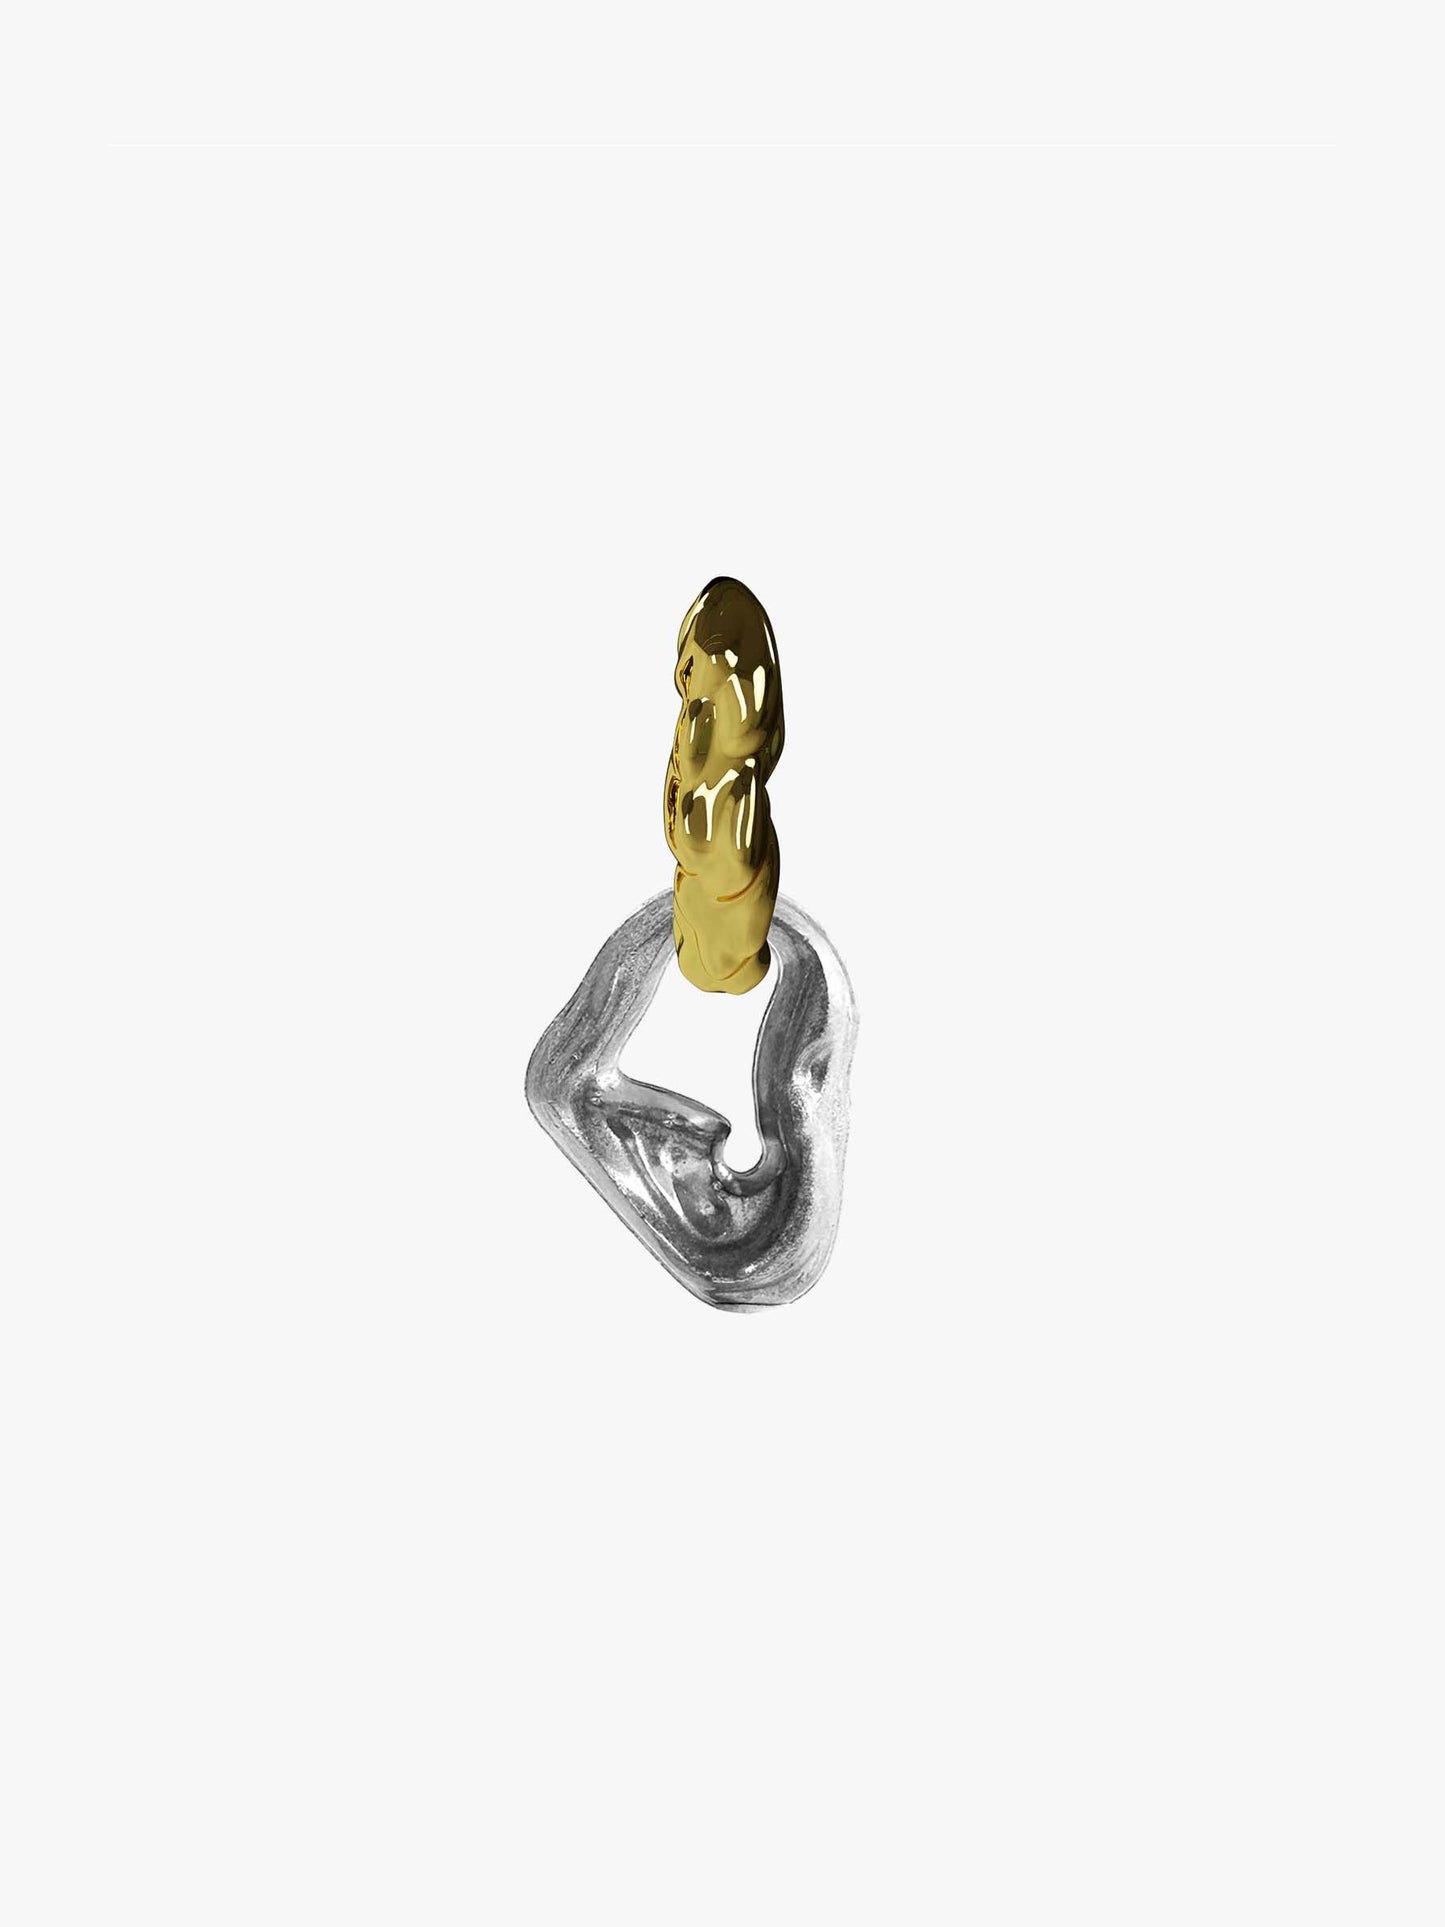 Bia Nus chrome gold earring (pair)